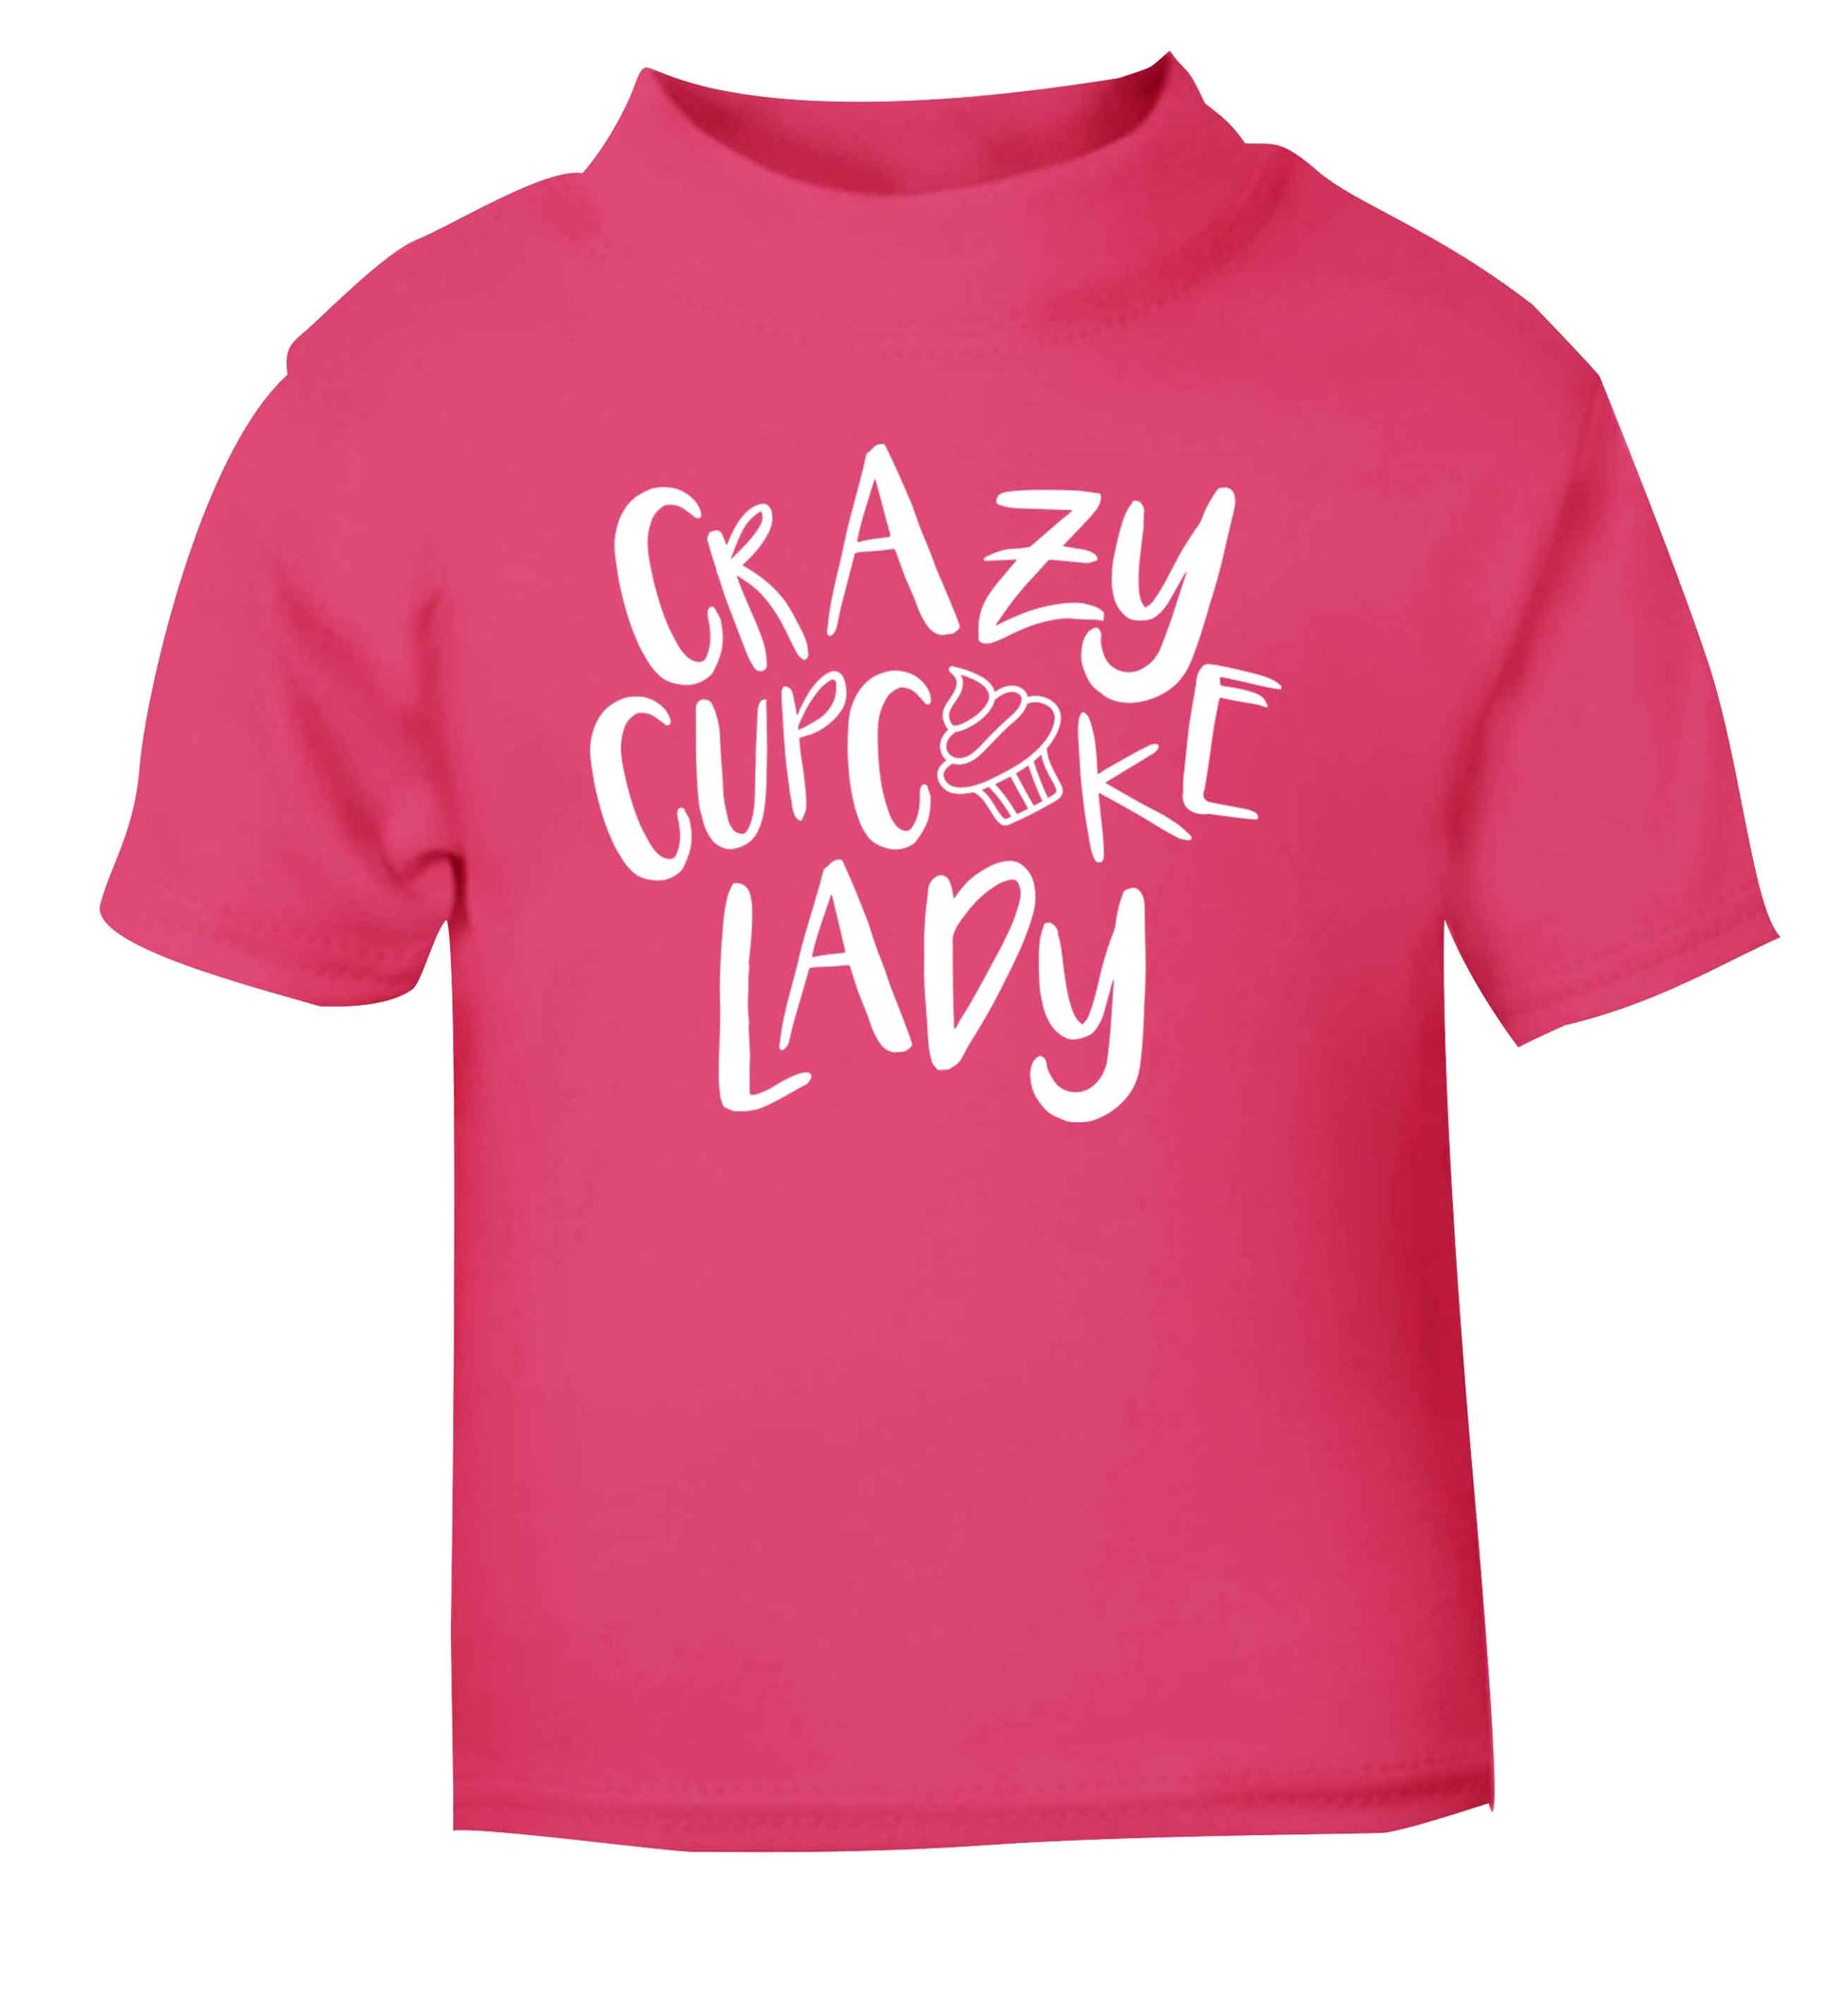 Crazy cupcake lady pink Baby Toddler Tshirt 2 Years